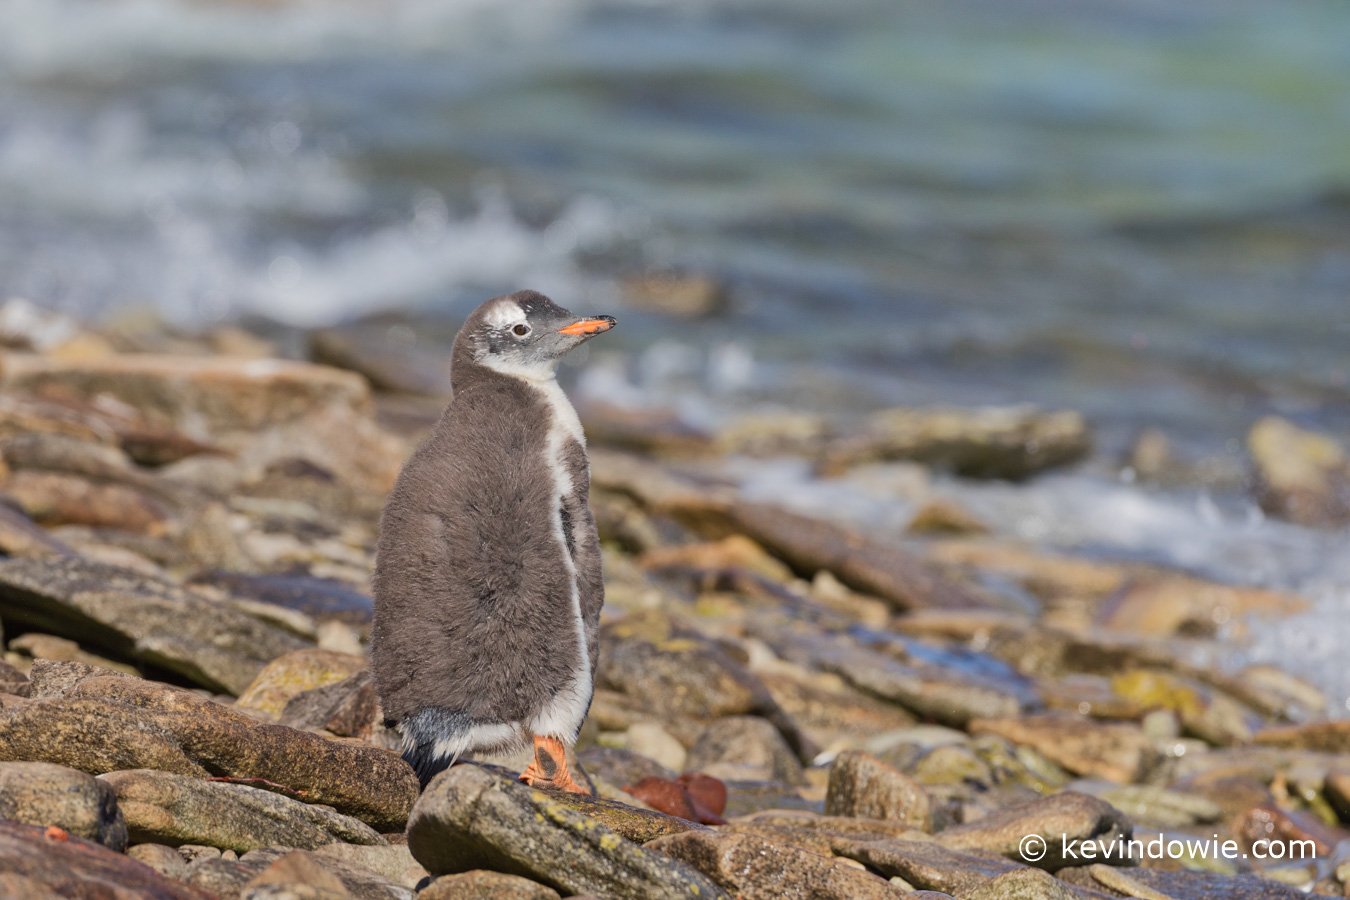 Gentoo chick on rocky beach, Wedddell Island.